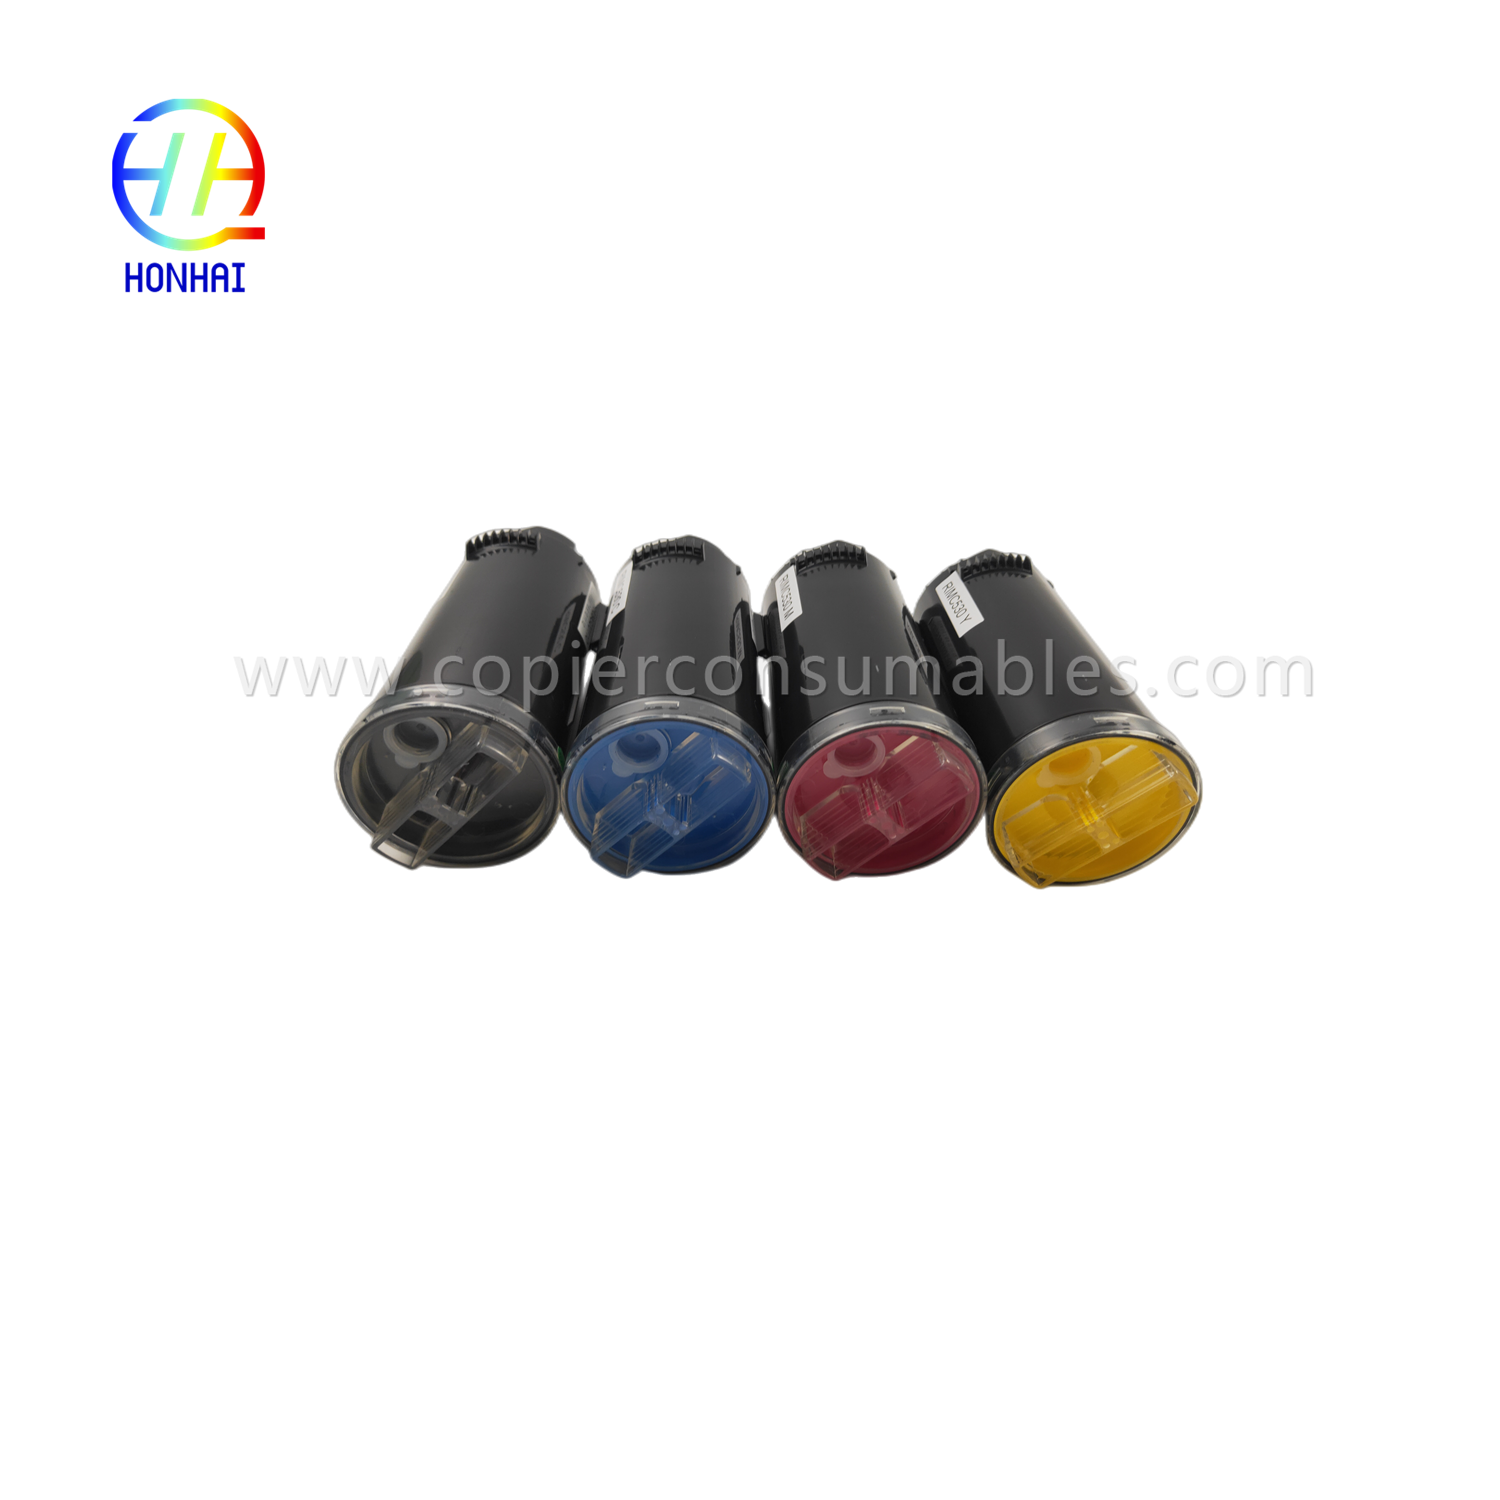 https://c585.goodo.net/toner-cartridge-set-imported-powder-for-ricoh-imc530-imc530f-imc530fb-ref-418240-ref-418241-ref-418242-ref-418243-product